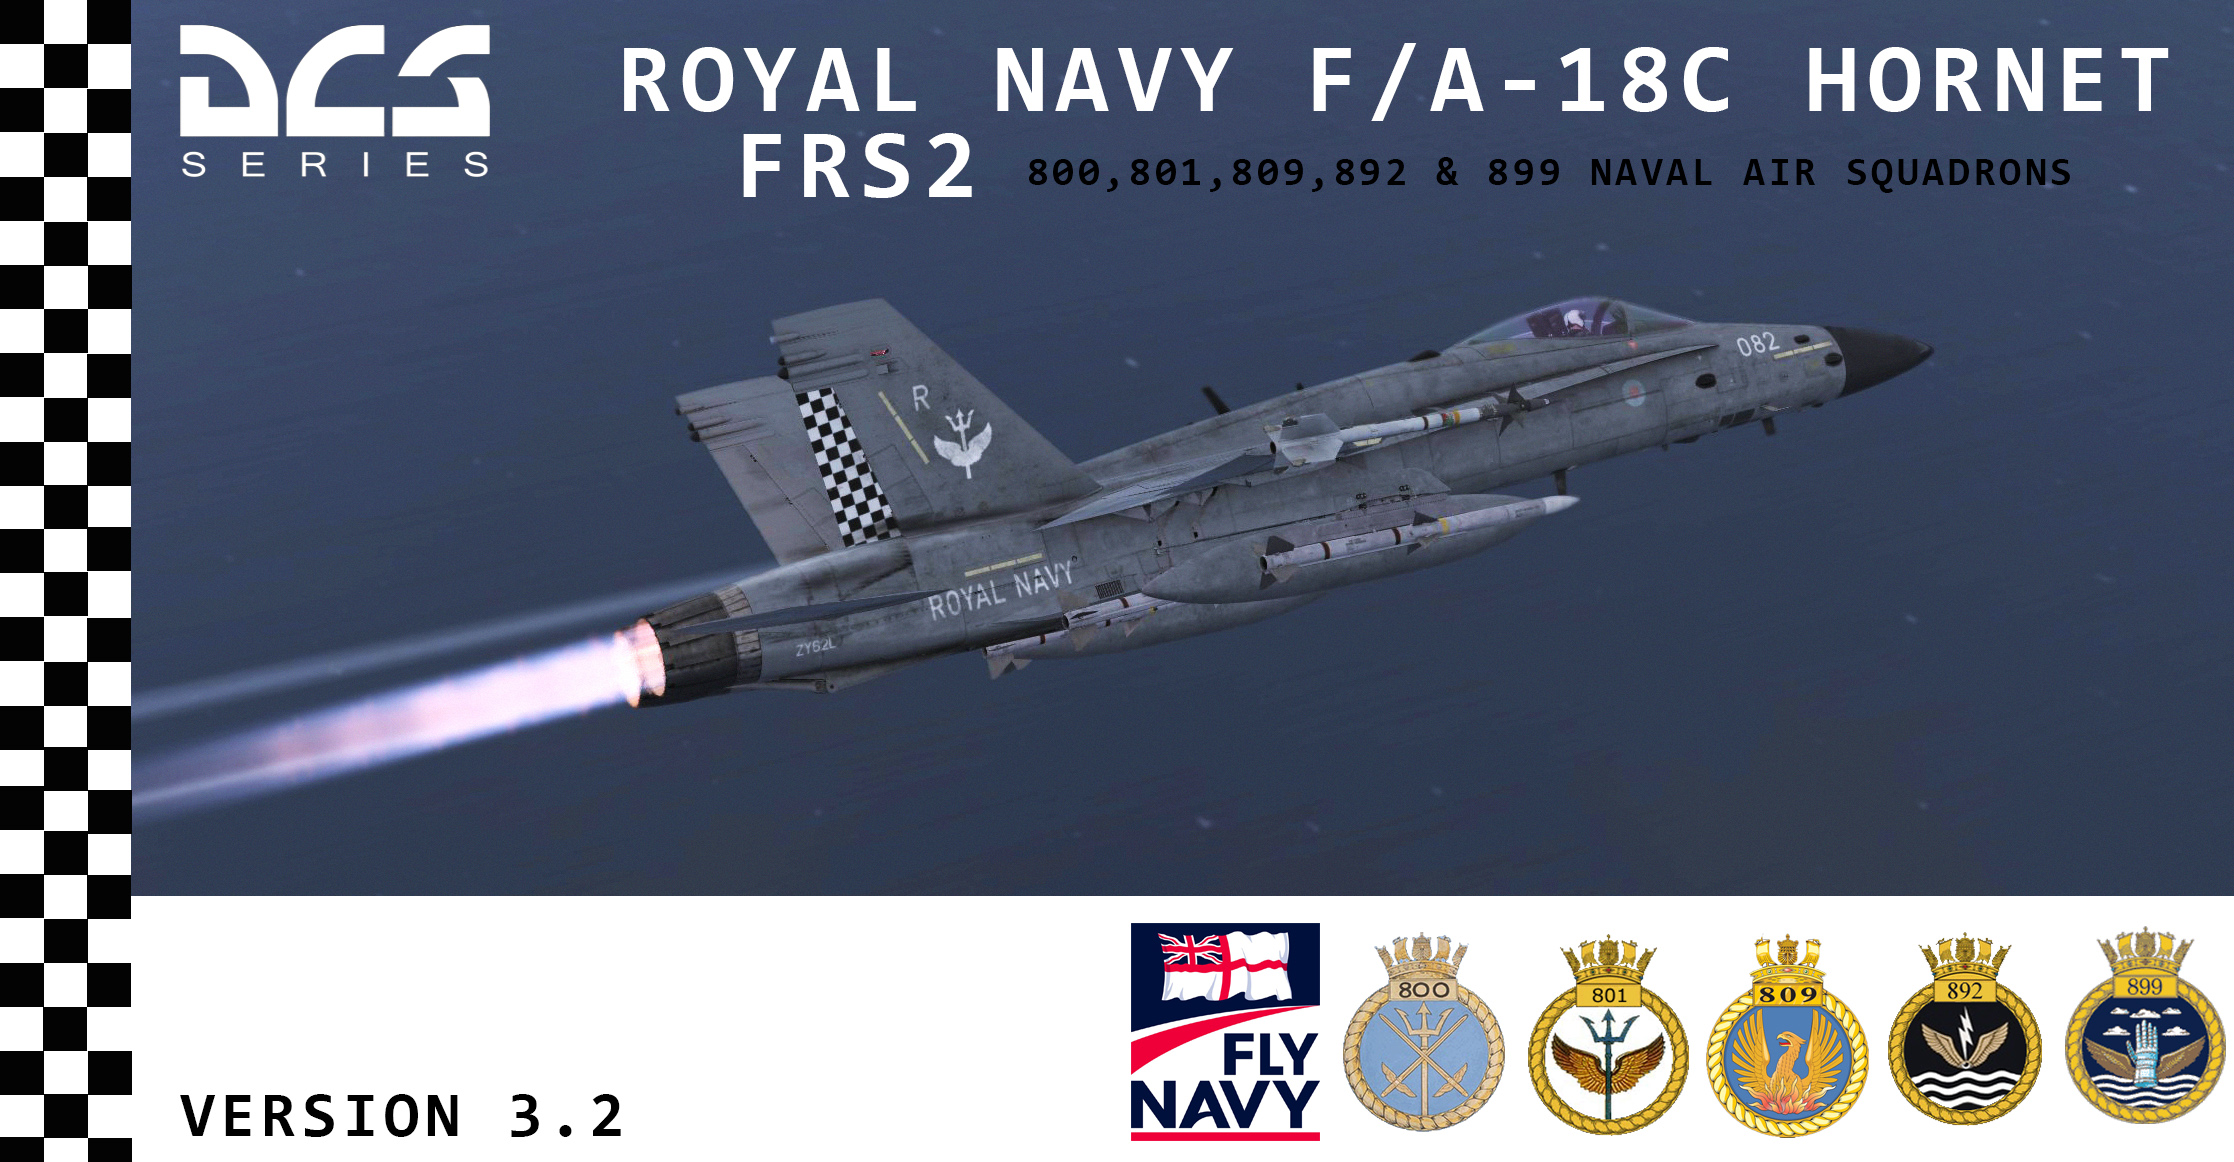 Royal Navy F/A-18C Hornet FRS2 Fictional Fleet Air Arm Skins - 800, 801,809,892 & 899 NAS | Version 4.0